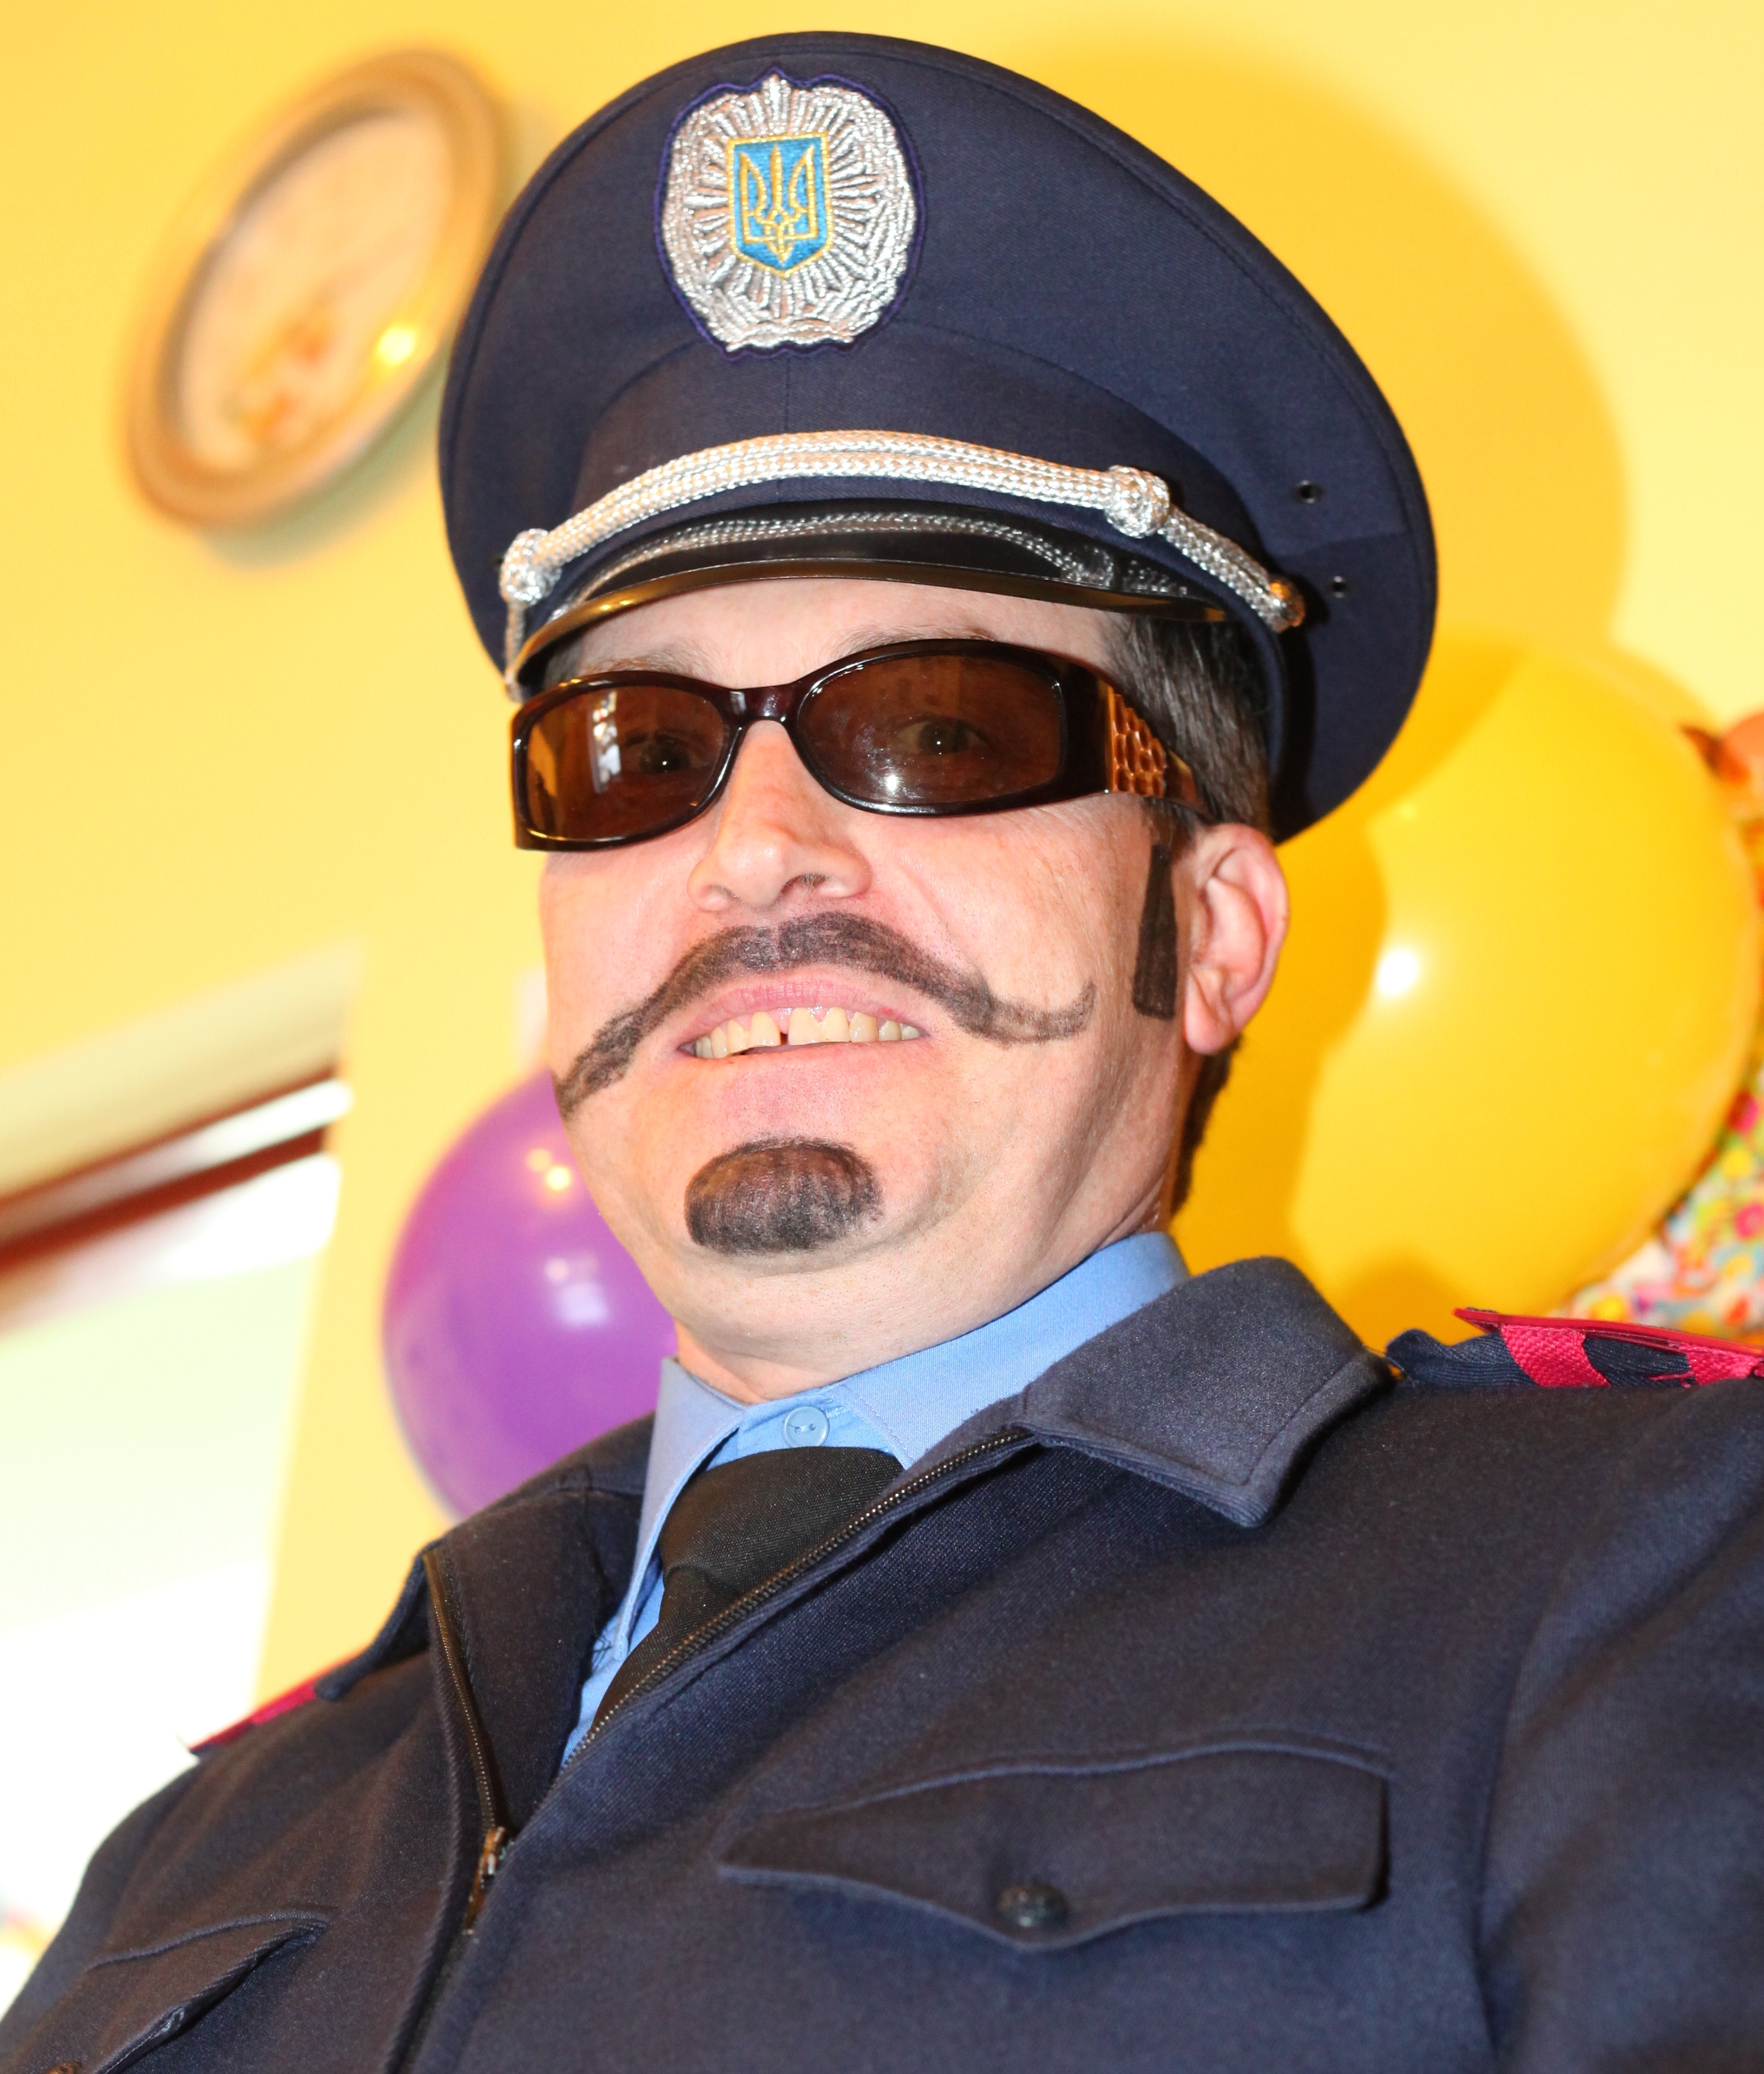 a handsome Catholic man dressed up as a policeman